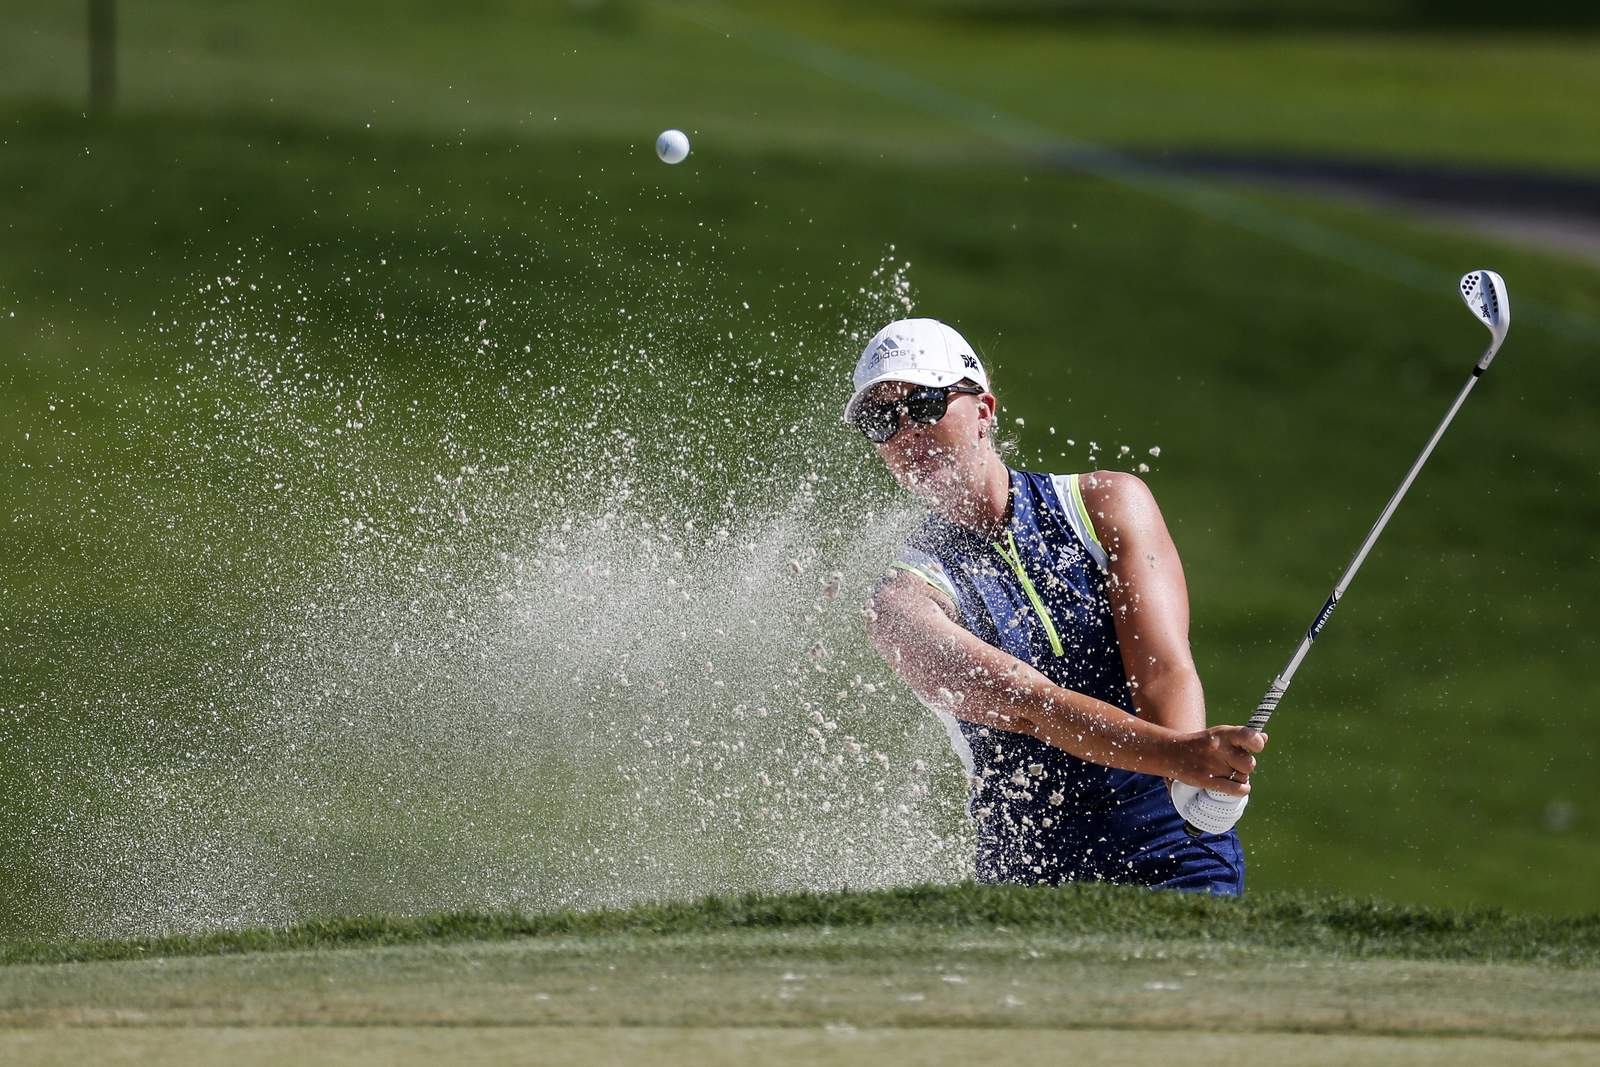 Kang beats desert heat and shares early lead in LPGA major